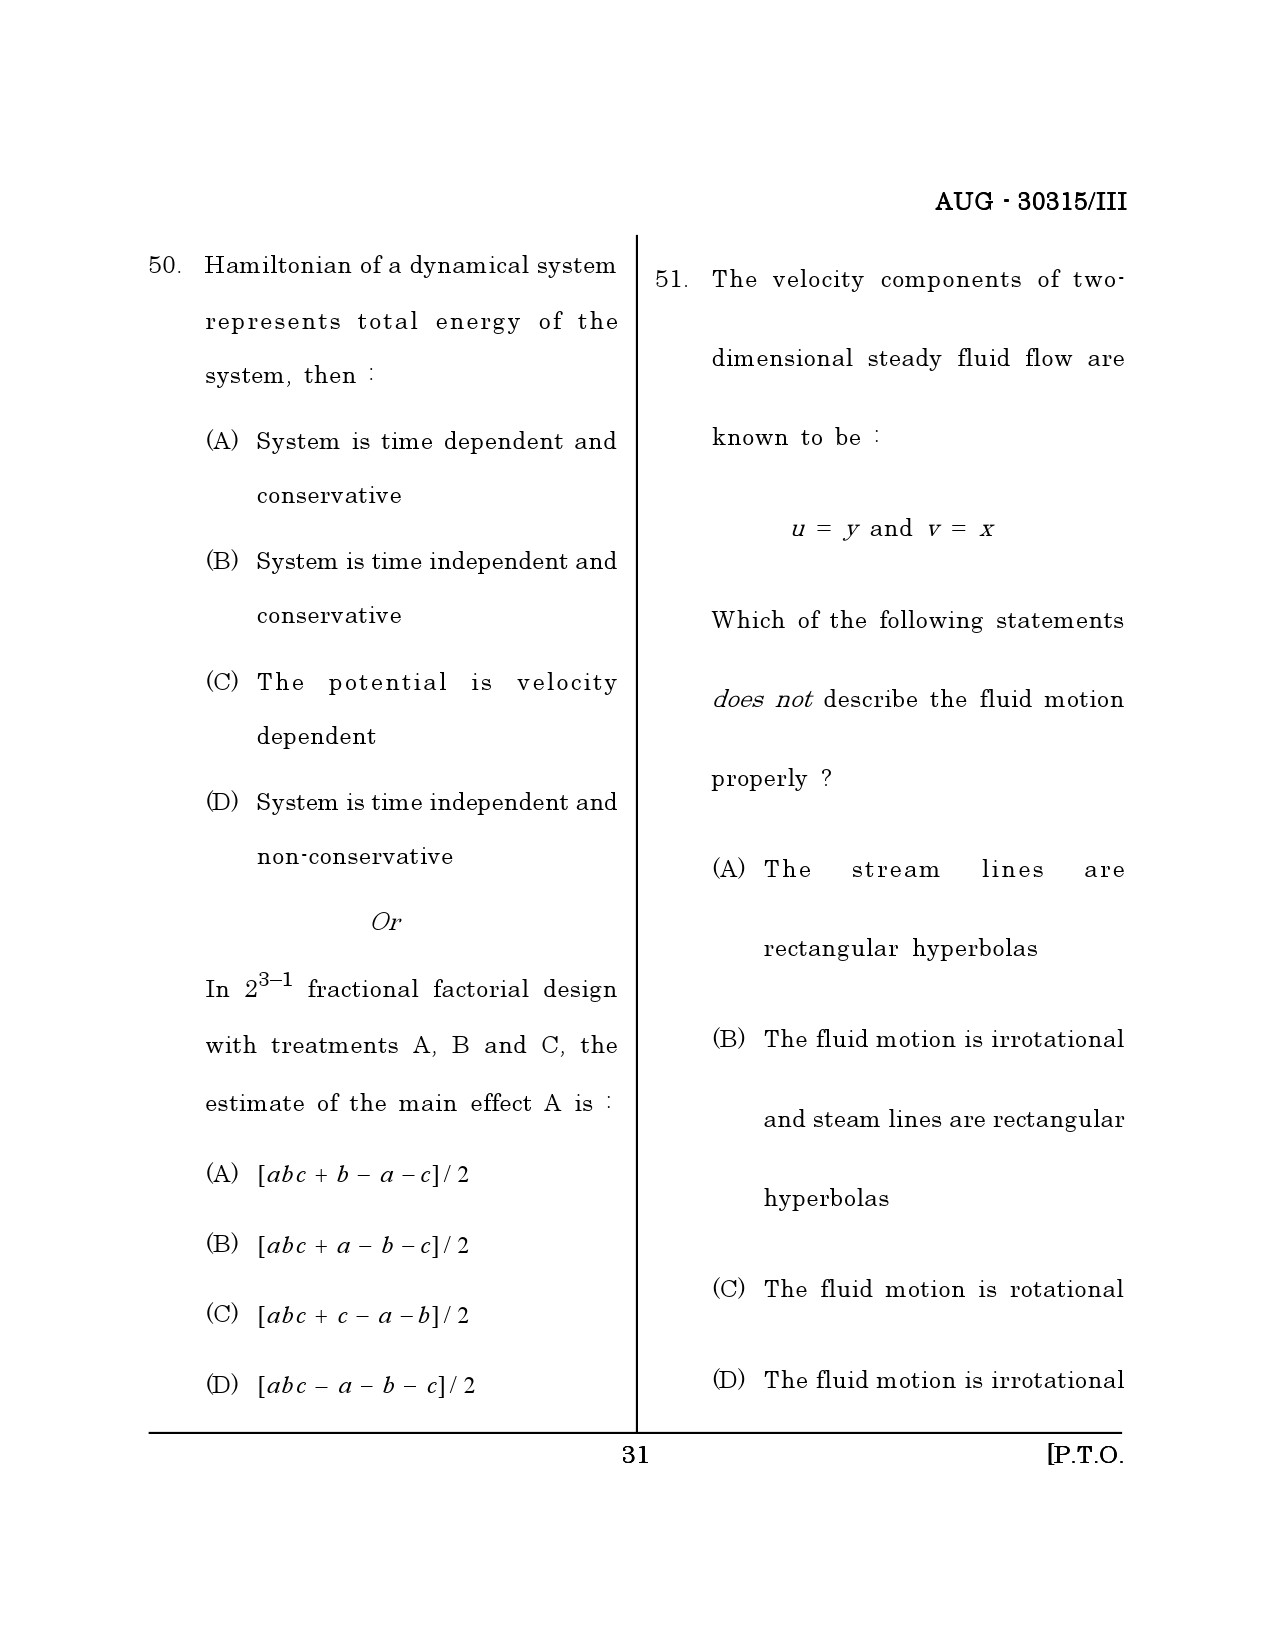 Maharashtra SET Mathematical Sciences Question Paper III August 2015 30